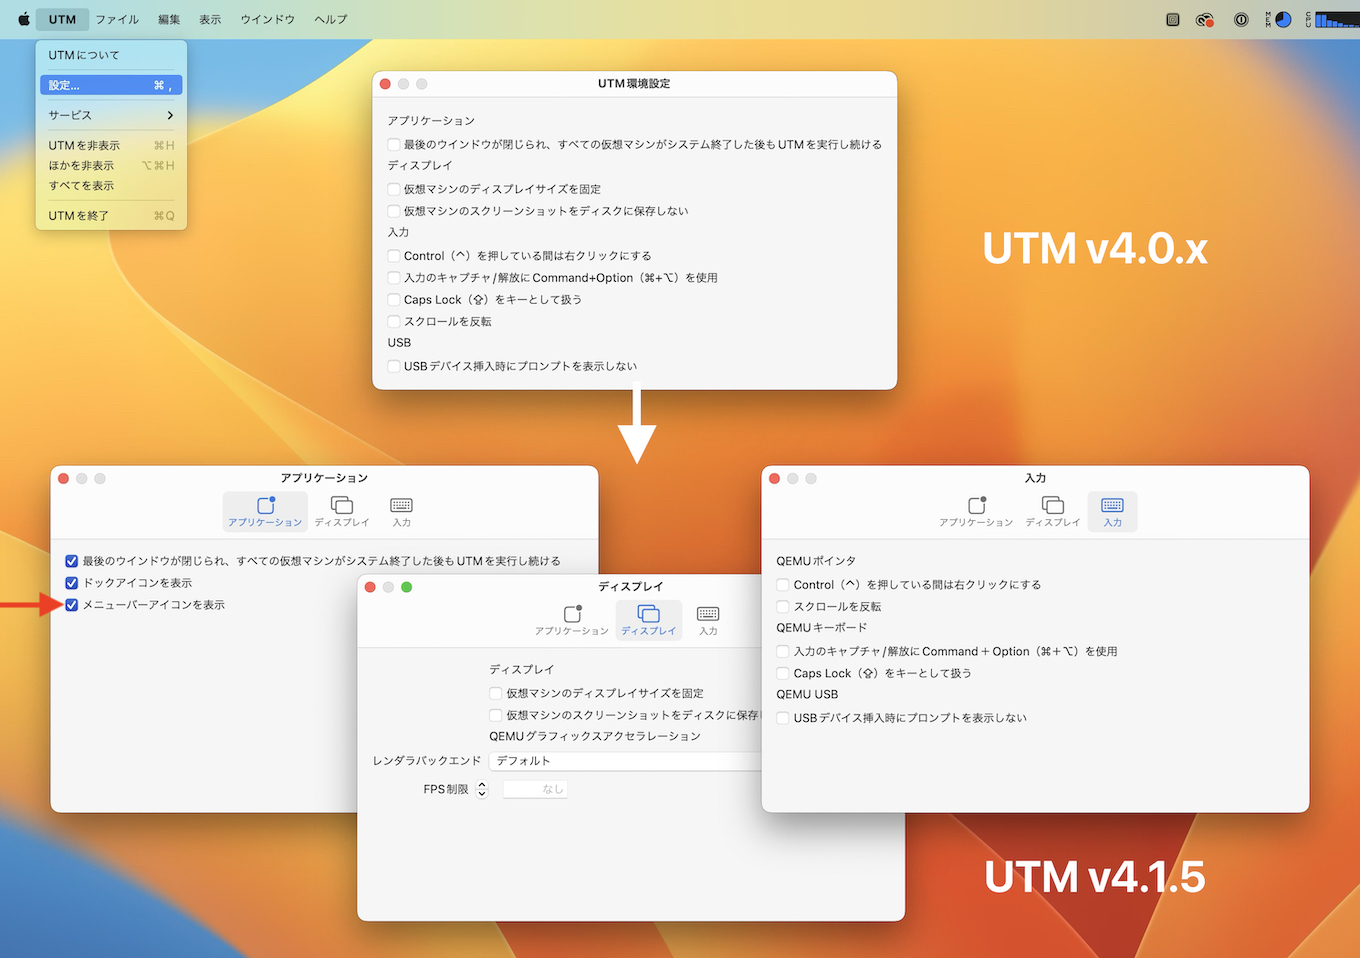 UTM v4.1.5でアップデートされた設定